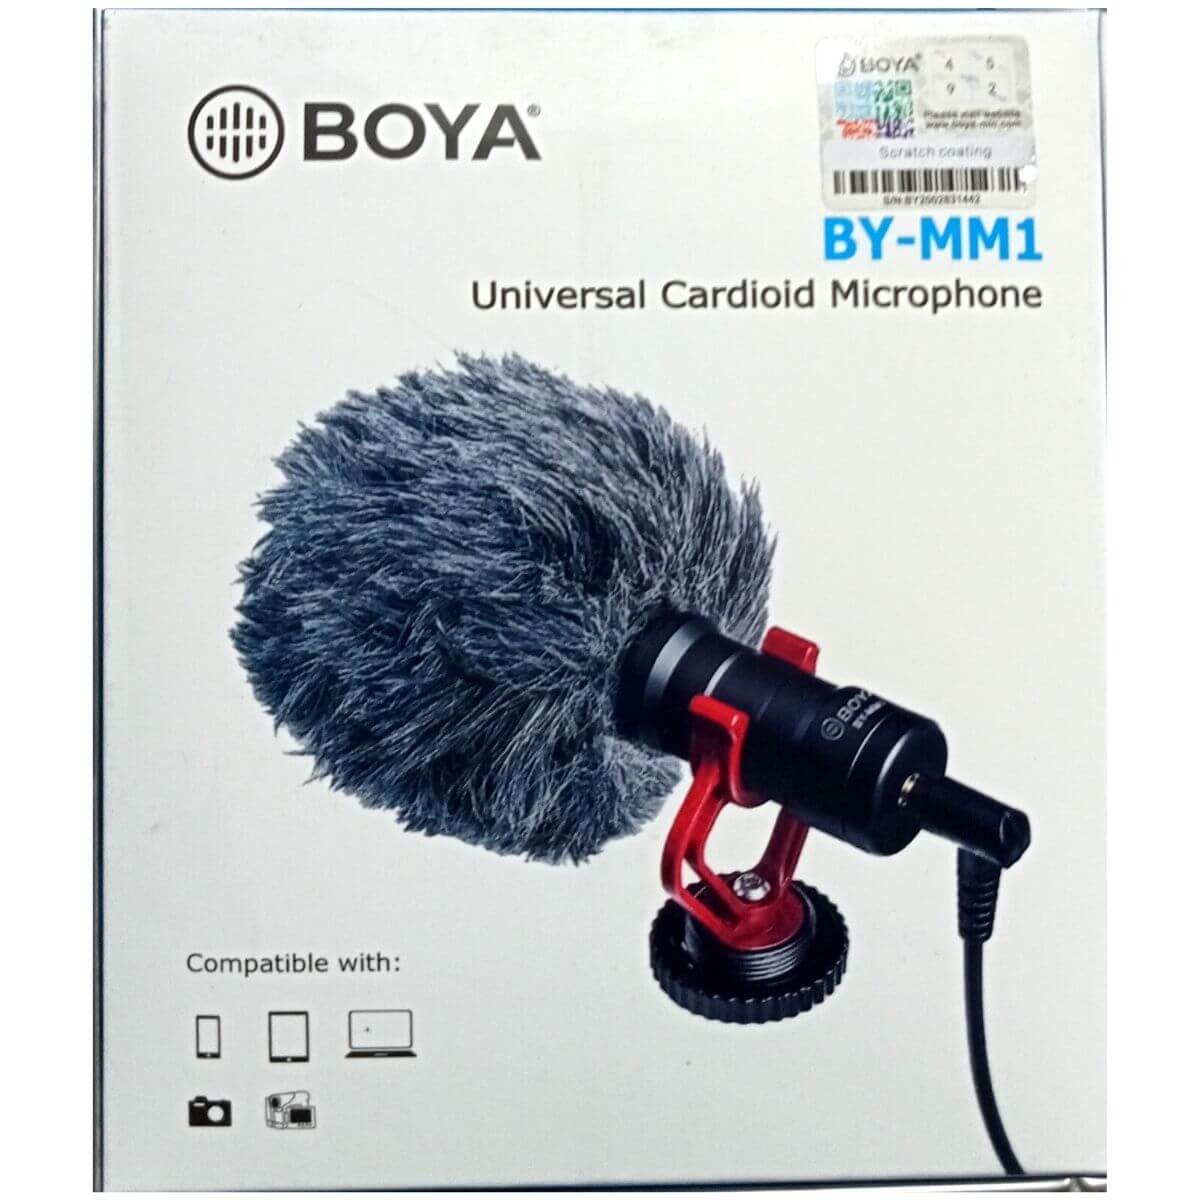 BOYA BY-MM1 Universal Cardioid Microphone BD